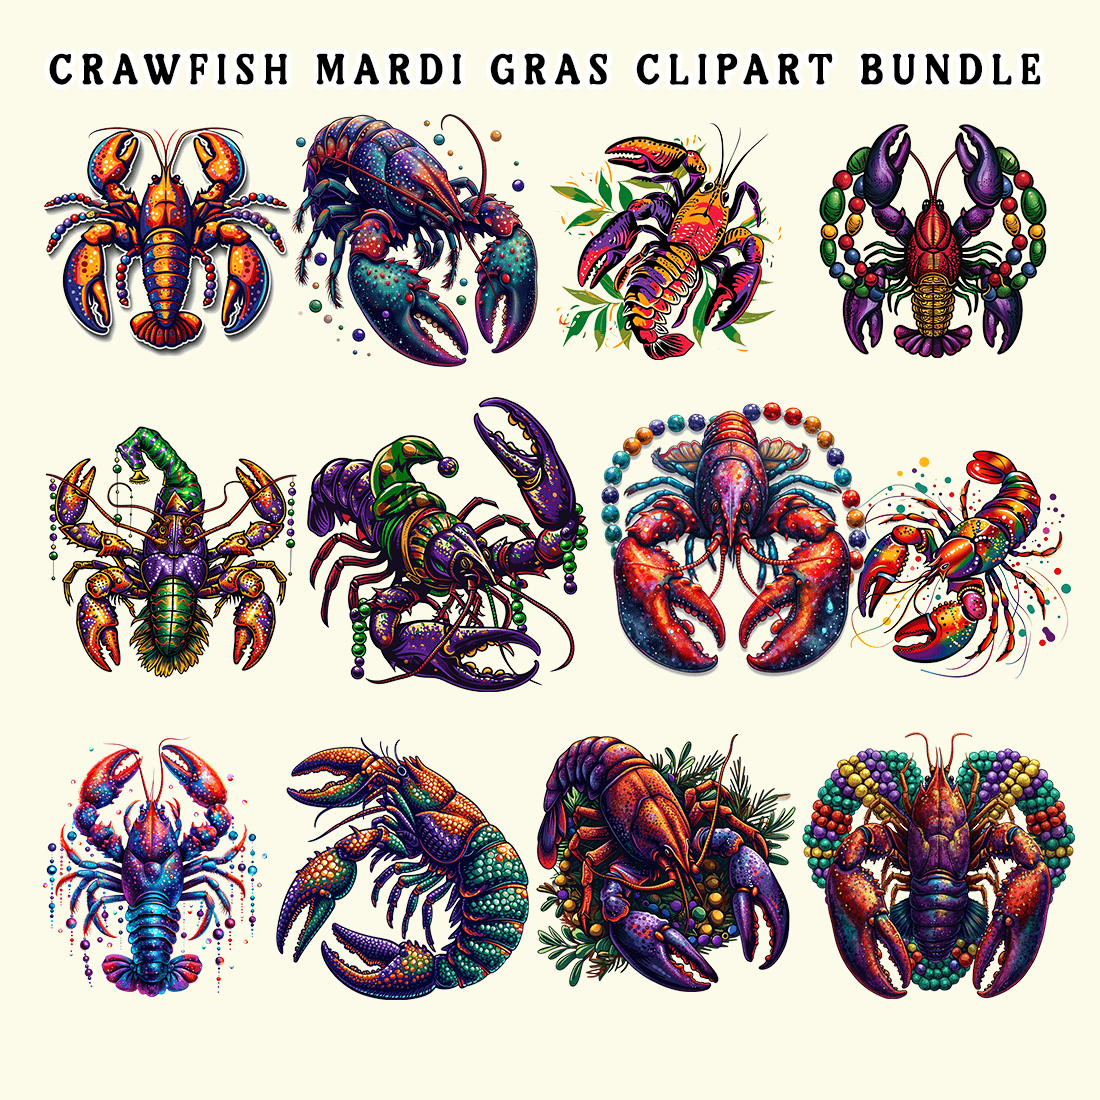 Crawfish Mardi Gras Clipart Bundle preview image.